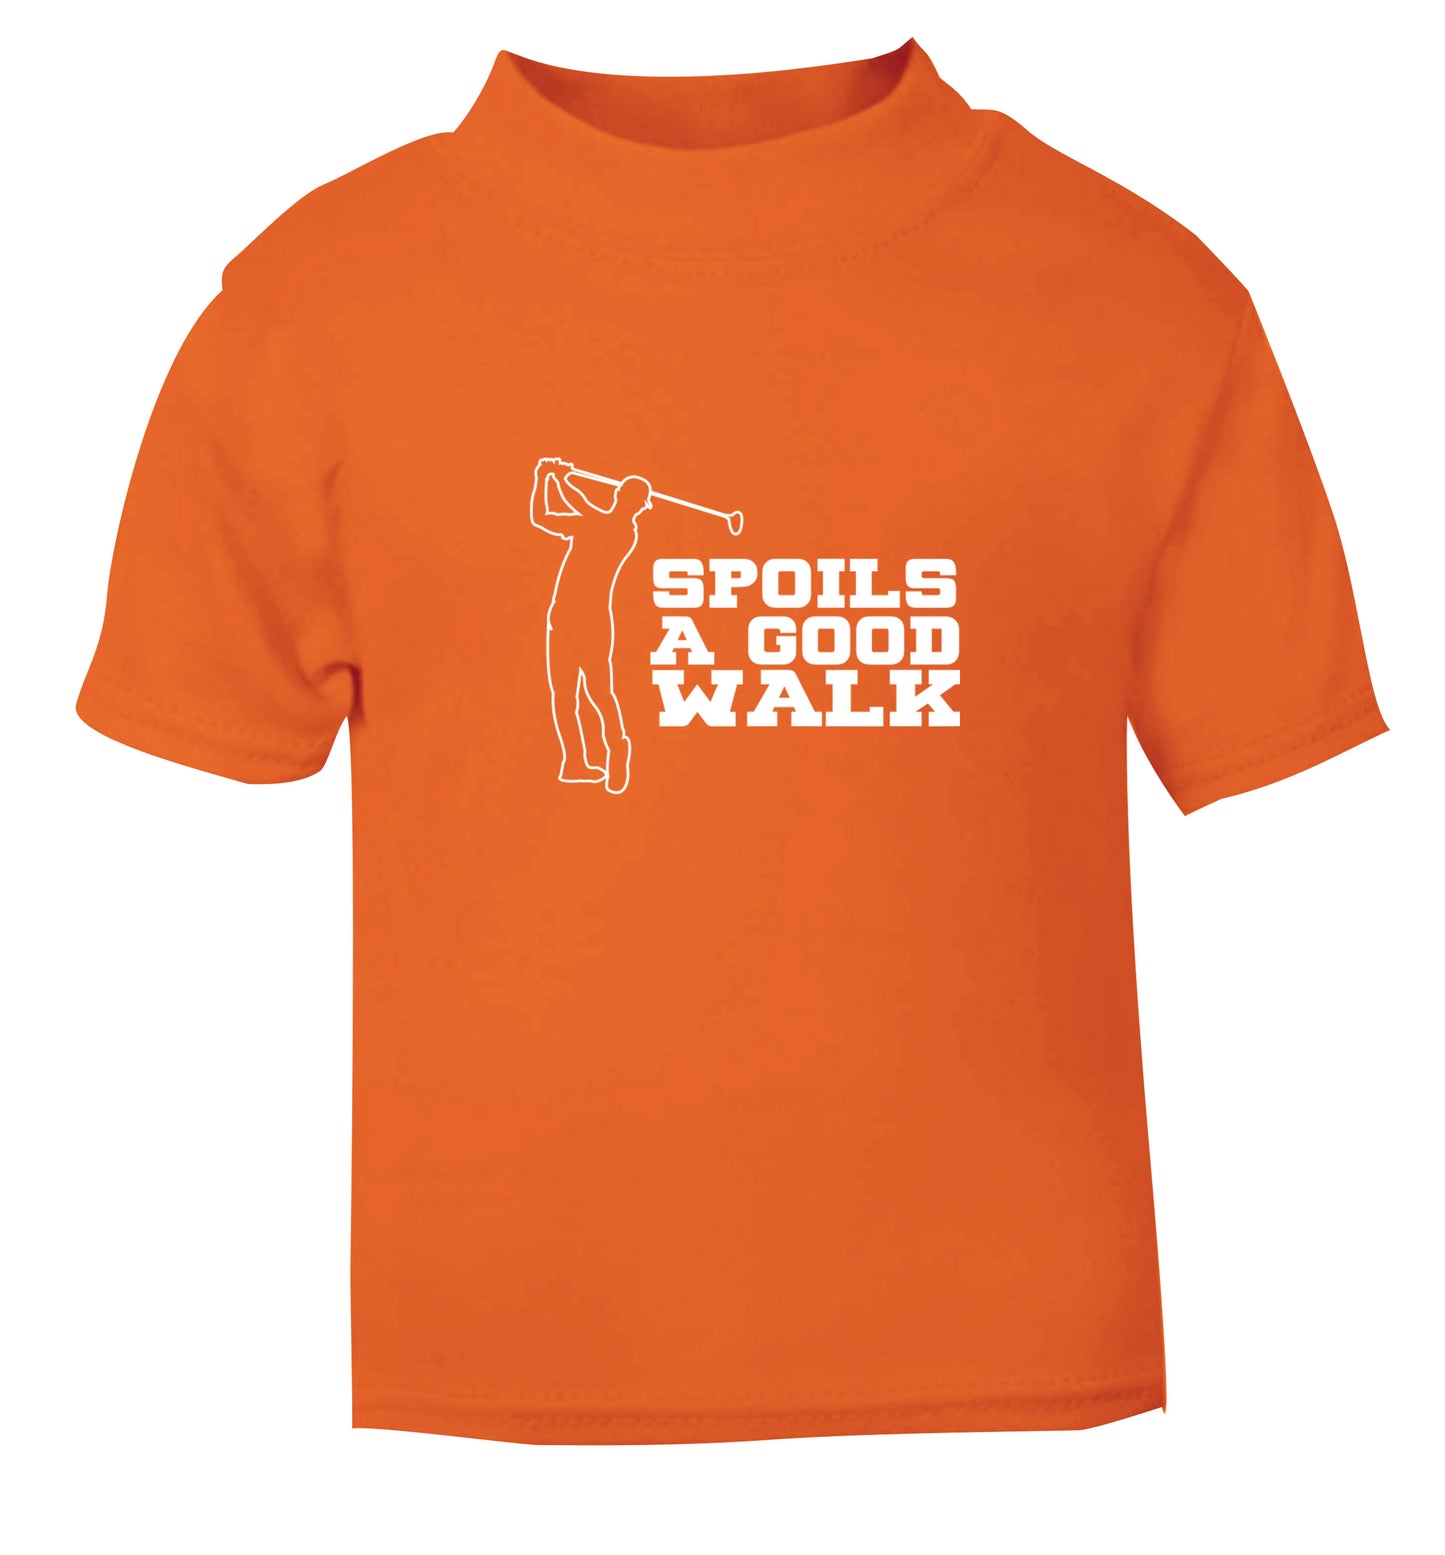 Golf spoils a good walk orange Baby Toddler Tshirt 2 Years